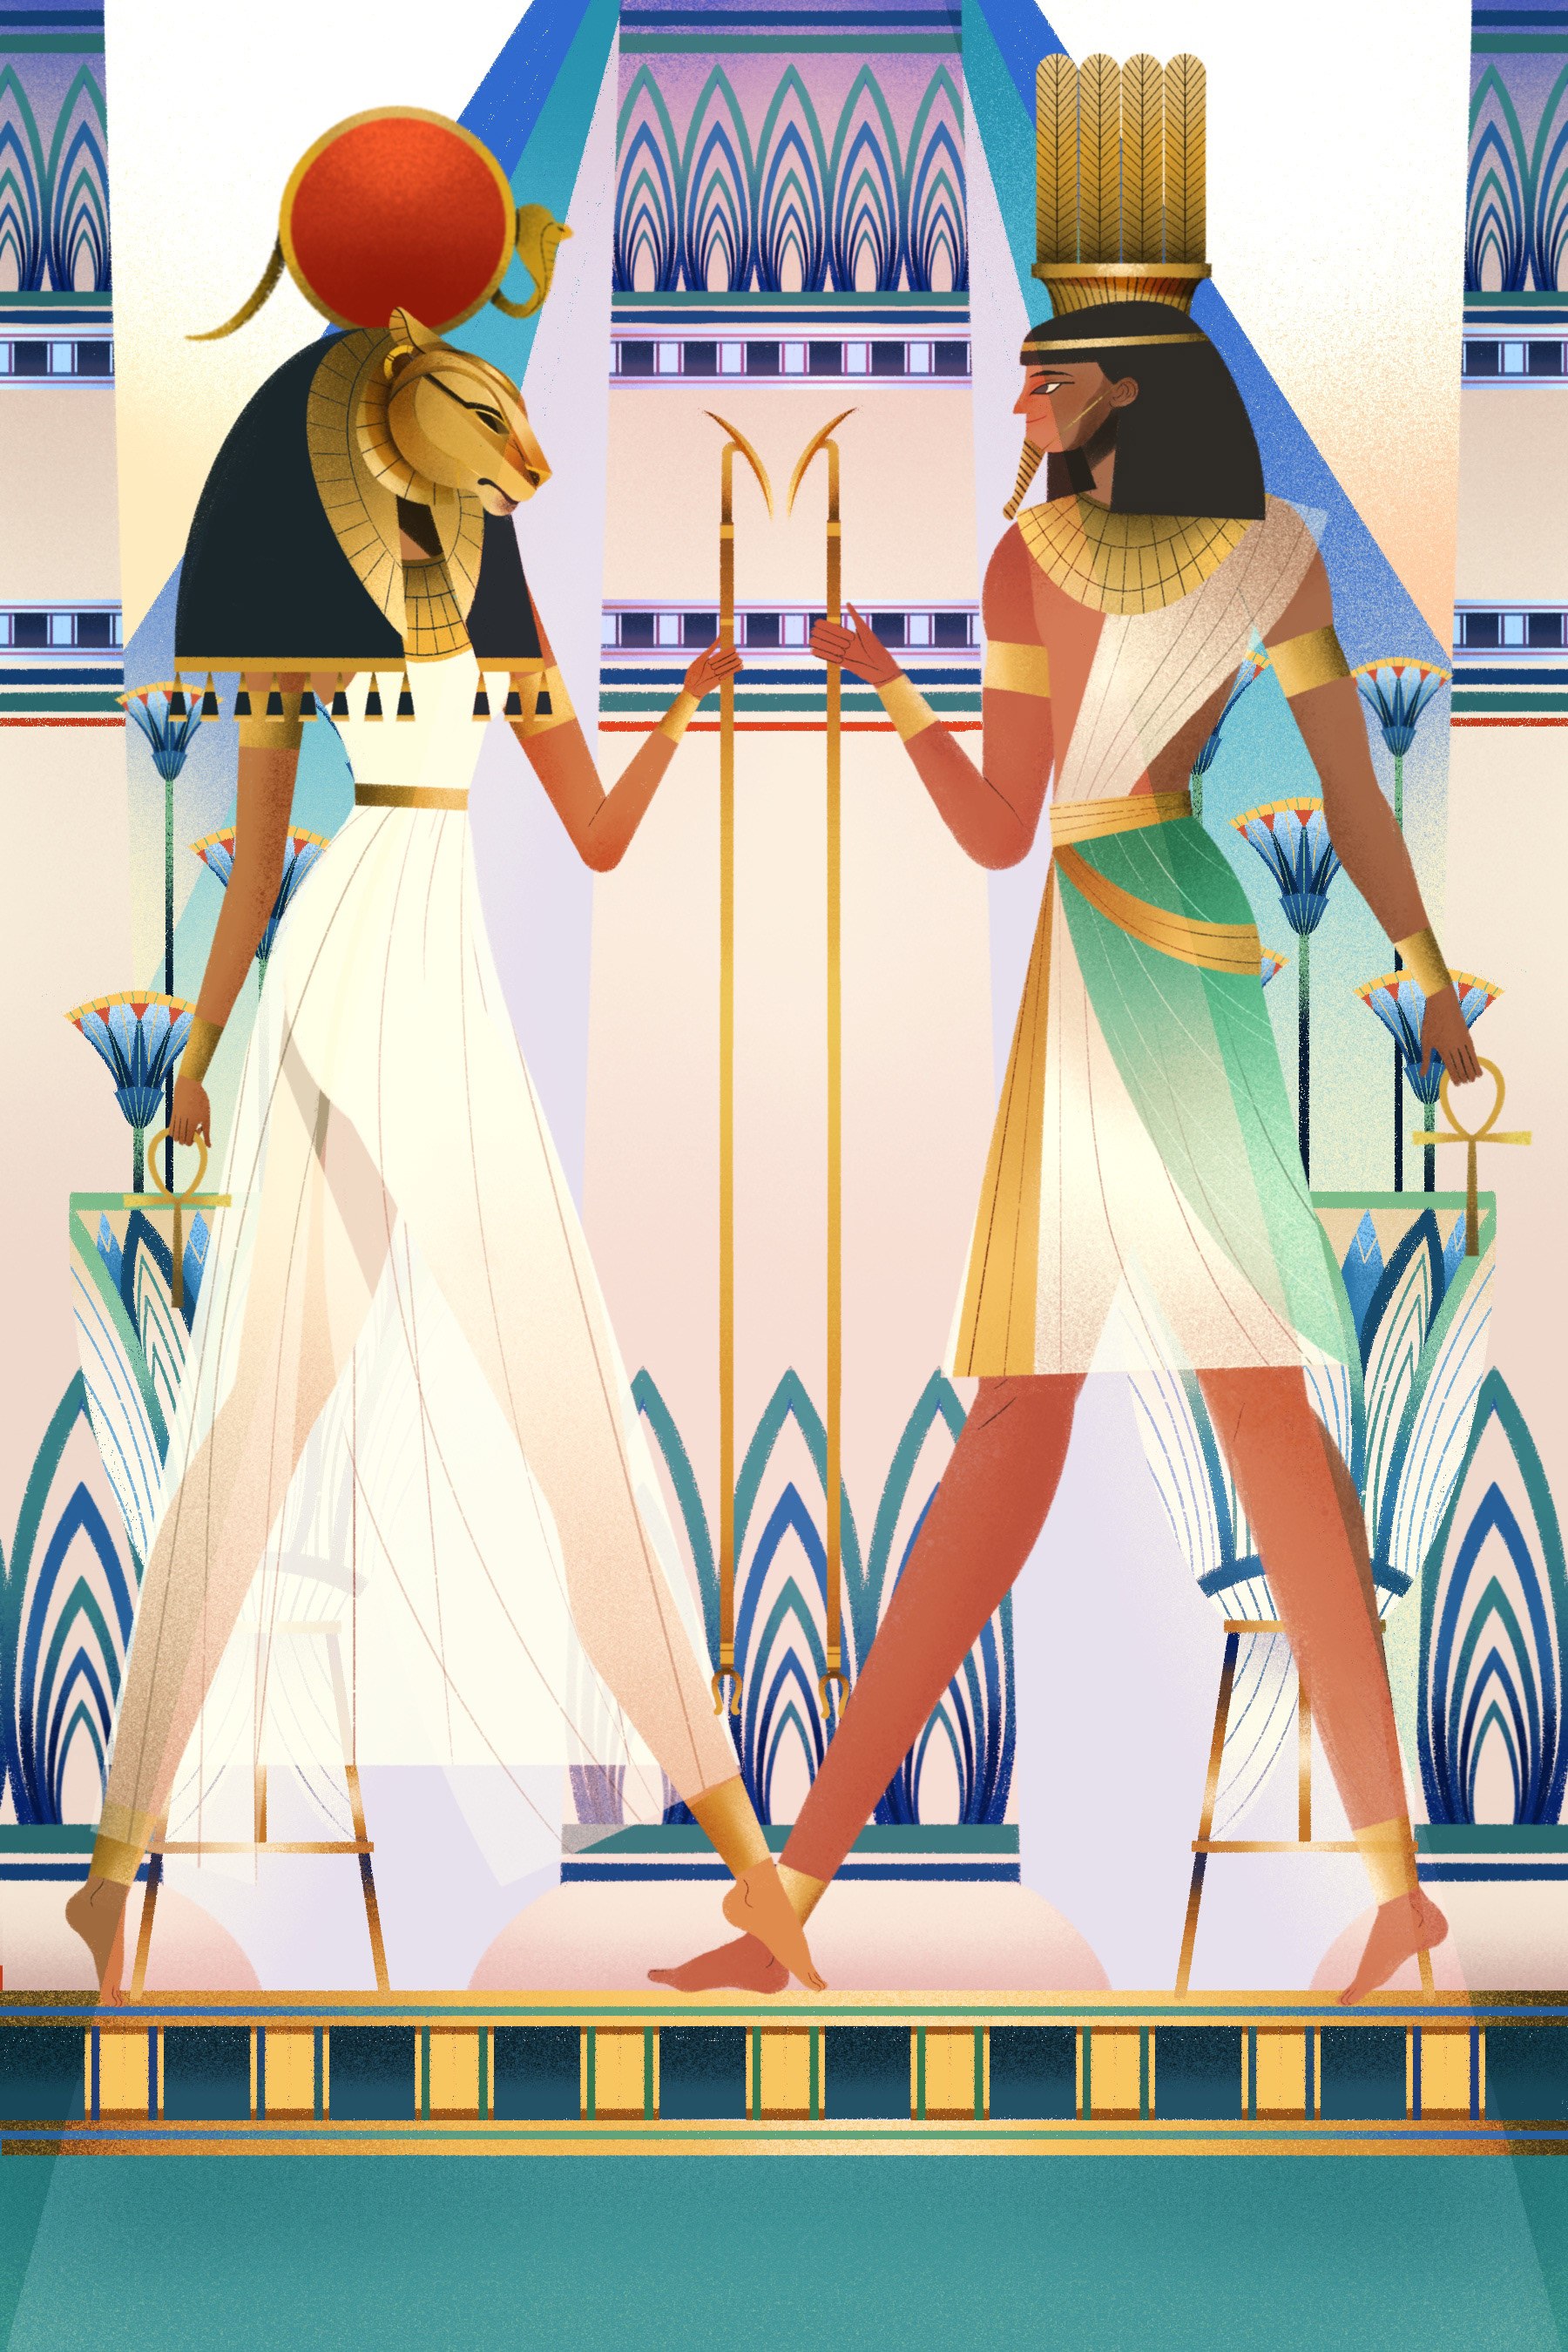 Meel T S Illustration Gods And Goddesses Of Ancient Egypt Egyptian Mythology